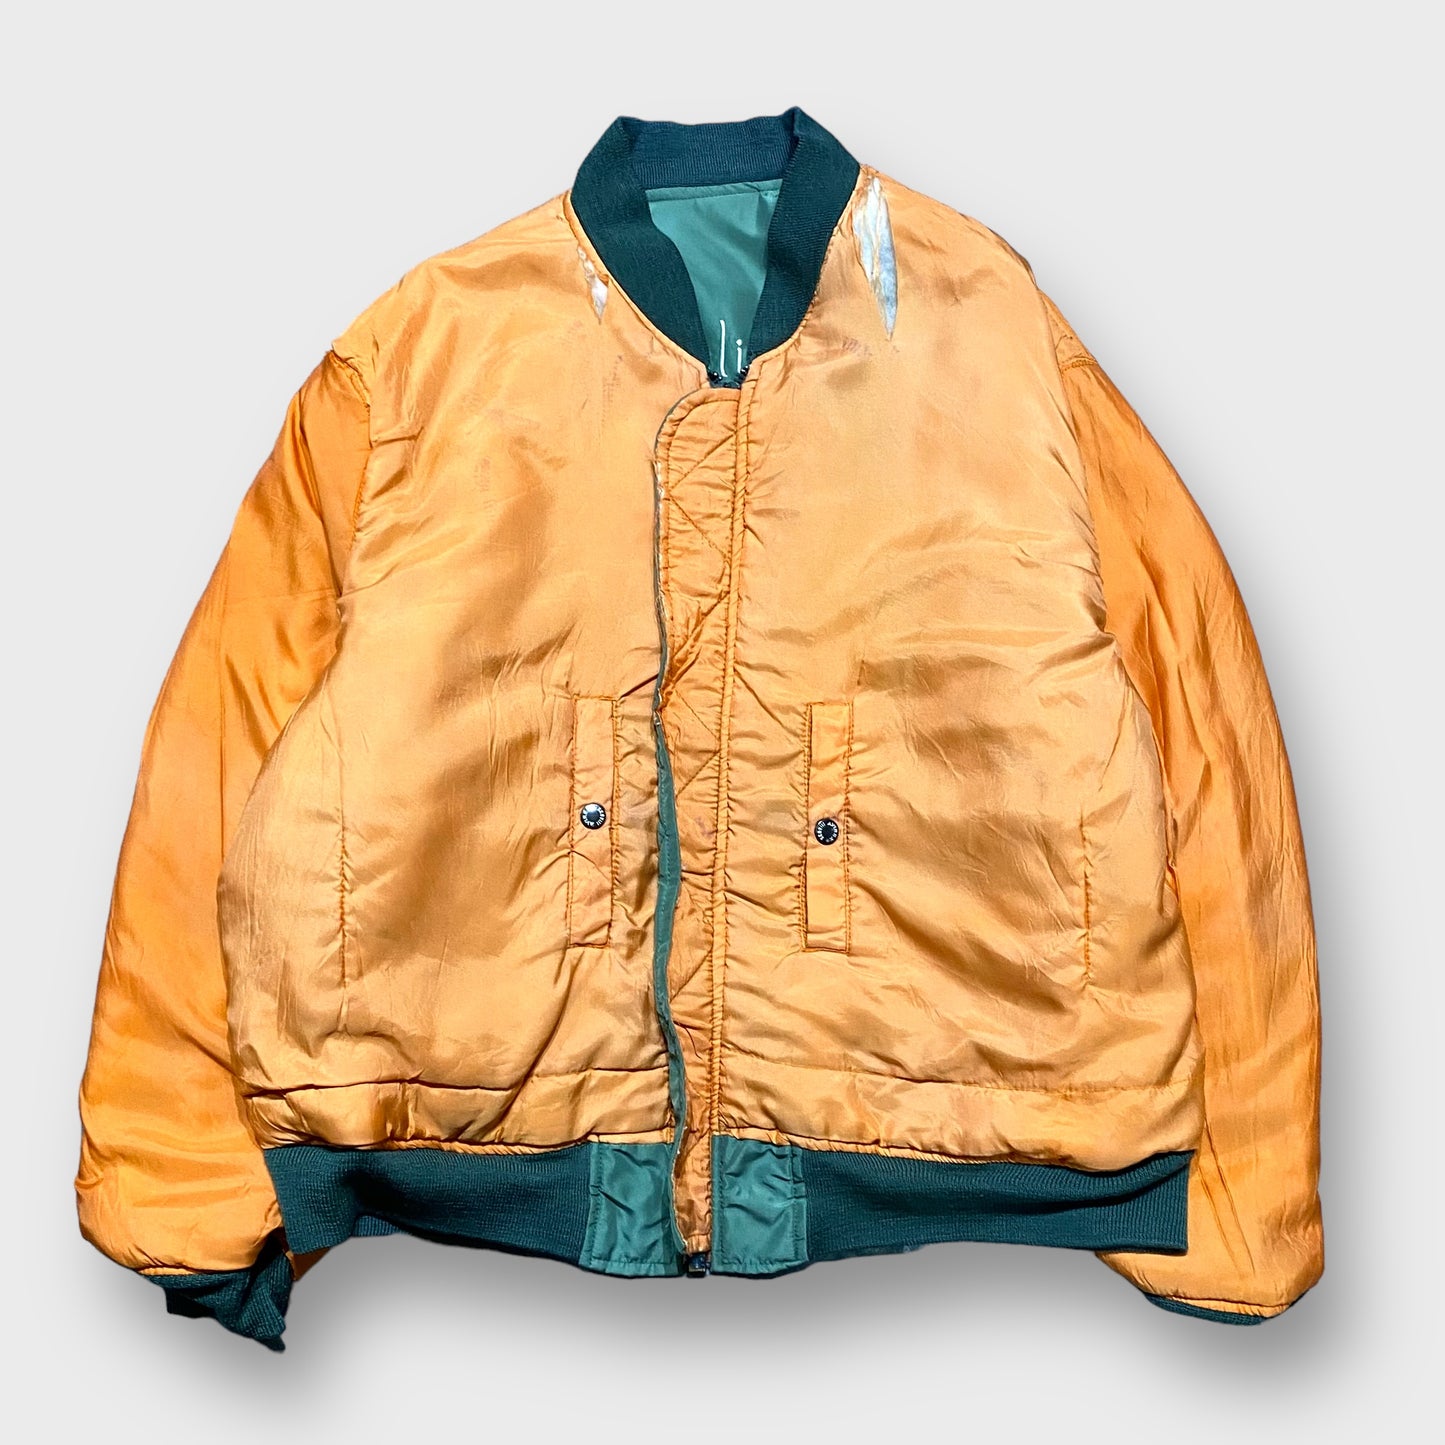 80's "AVIREX" Embroidery MA-1 type jacket